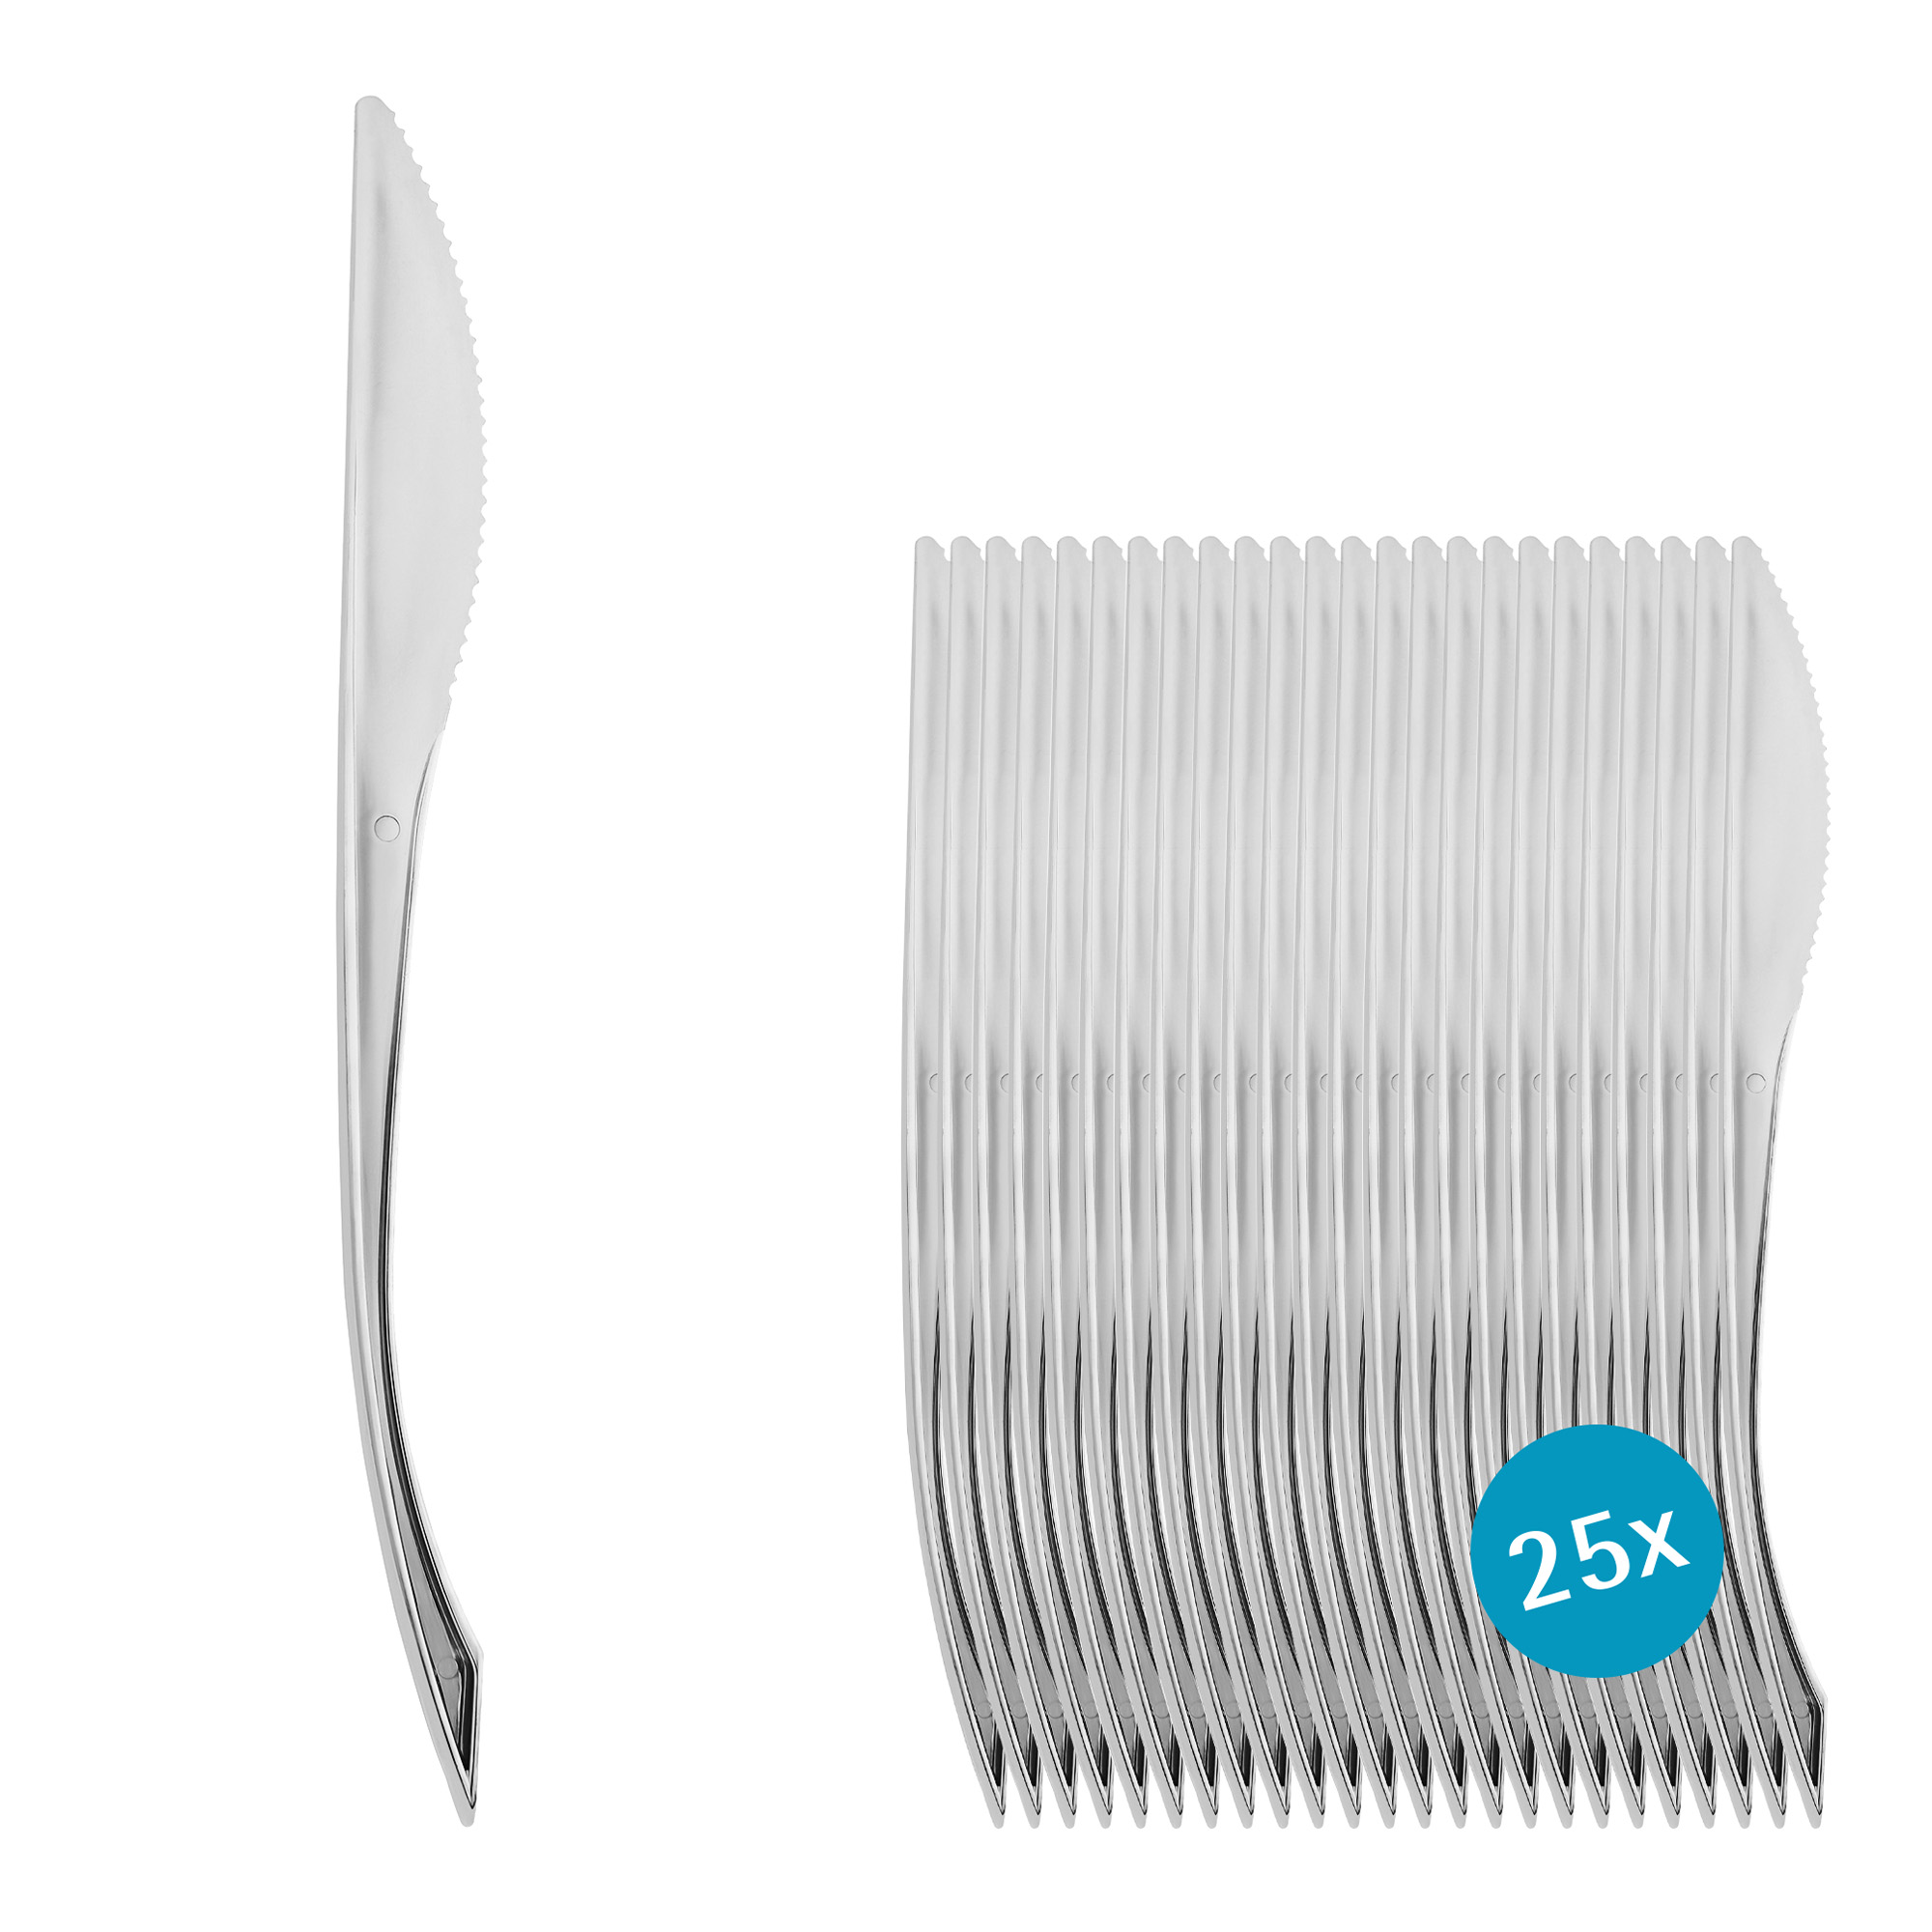 Tafelmesser aus Kunststoff Edelstahl-Look 25 Stück